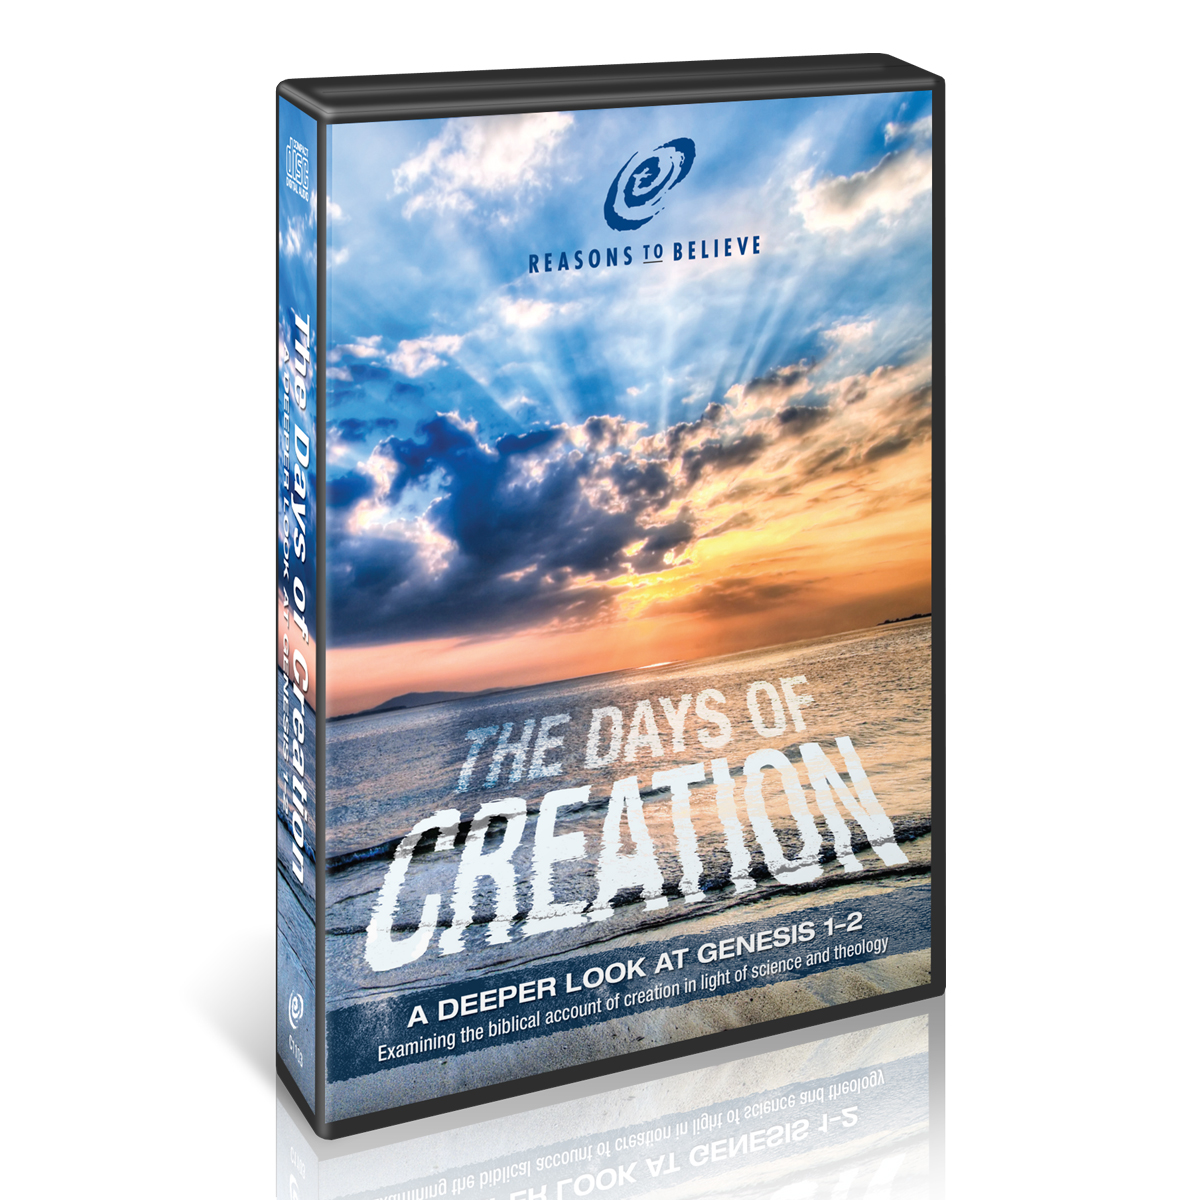 The Days of Creation (Audio CD Set) Image